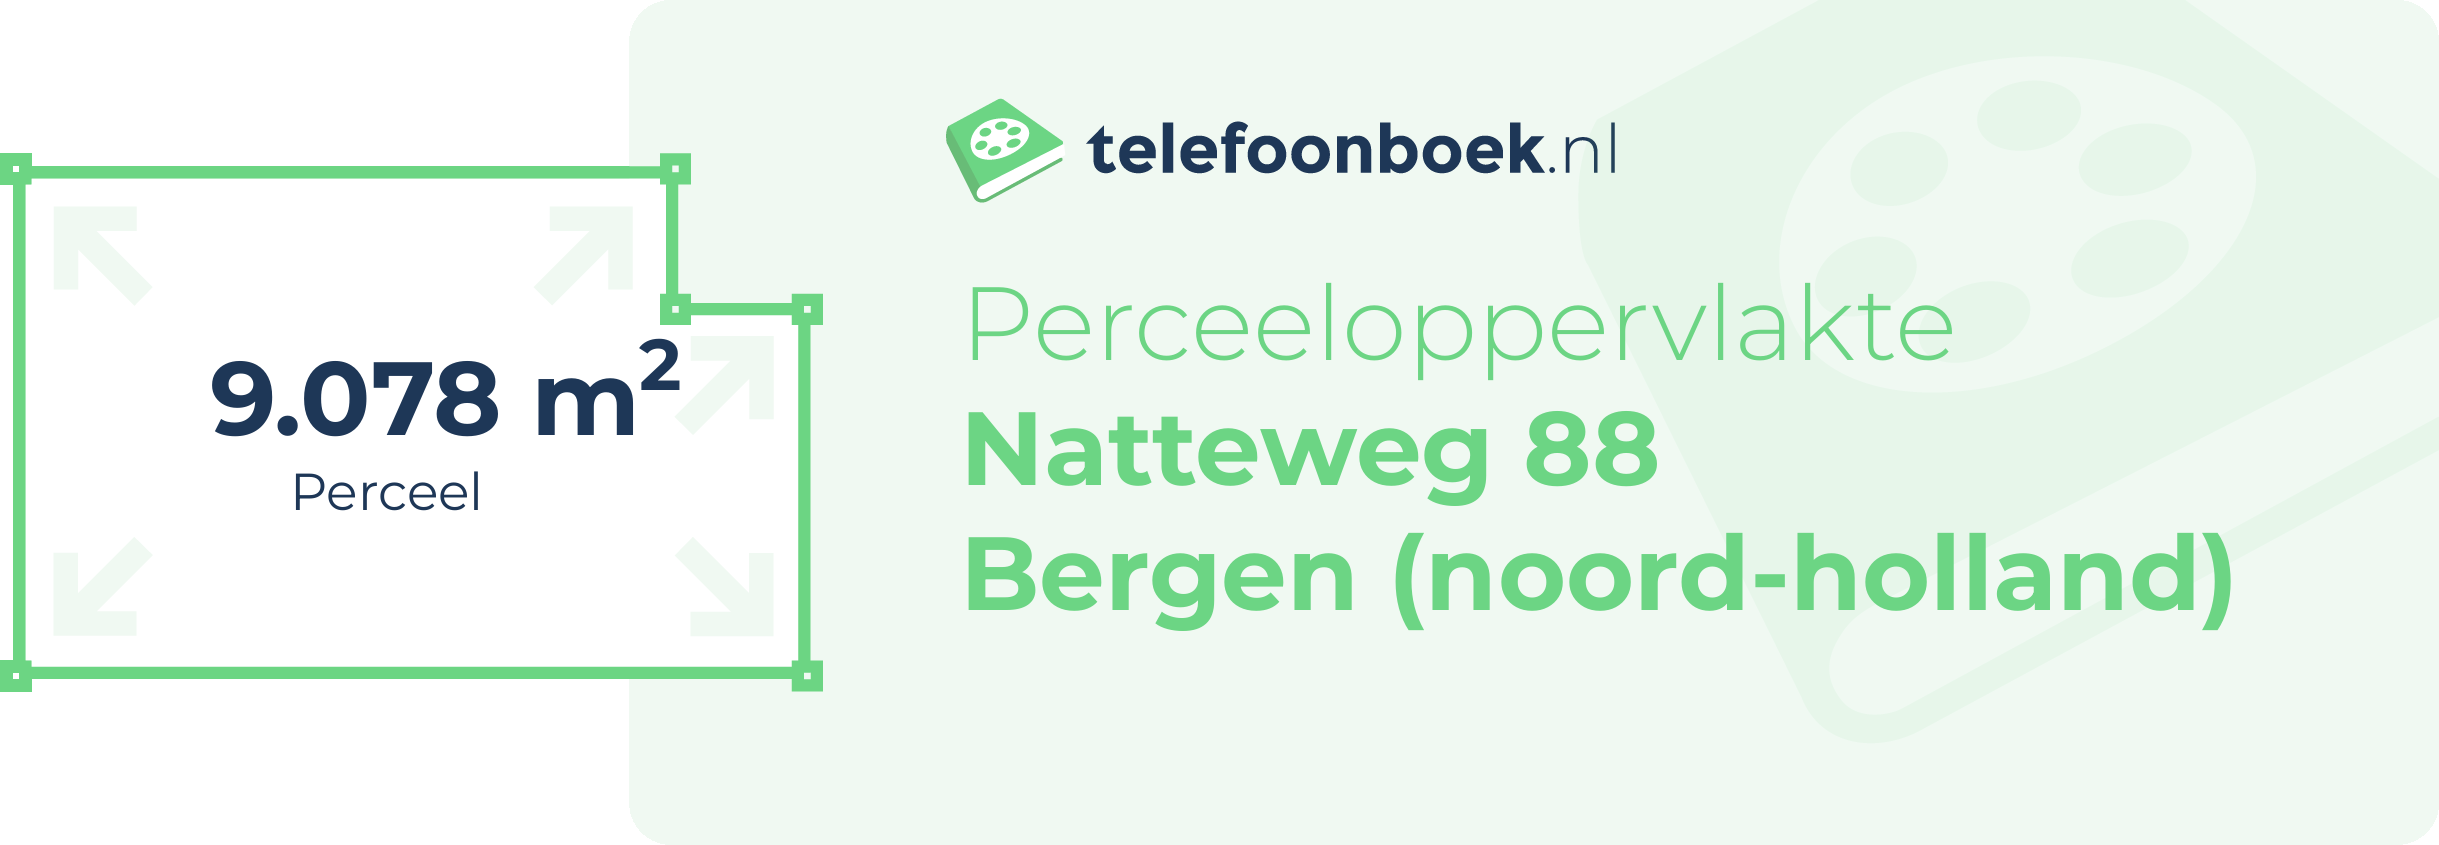 Perceeloppervlakte Natteweg 88 Bergen (Noord-Holland)